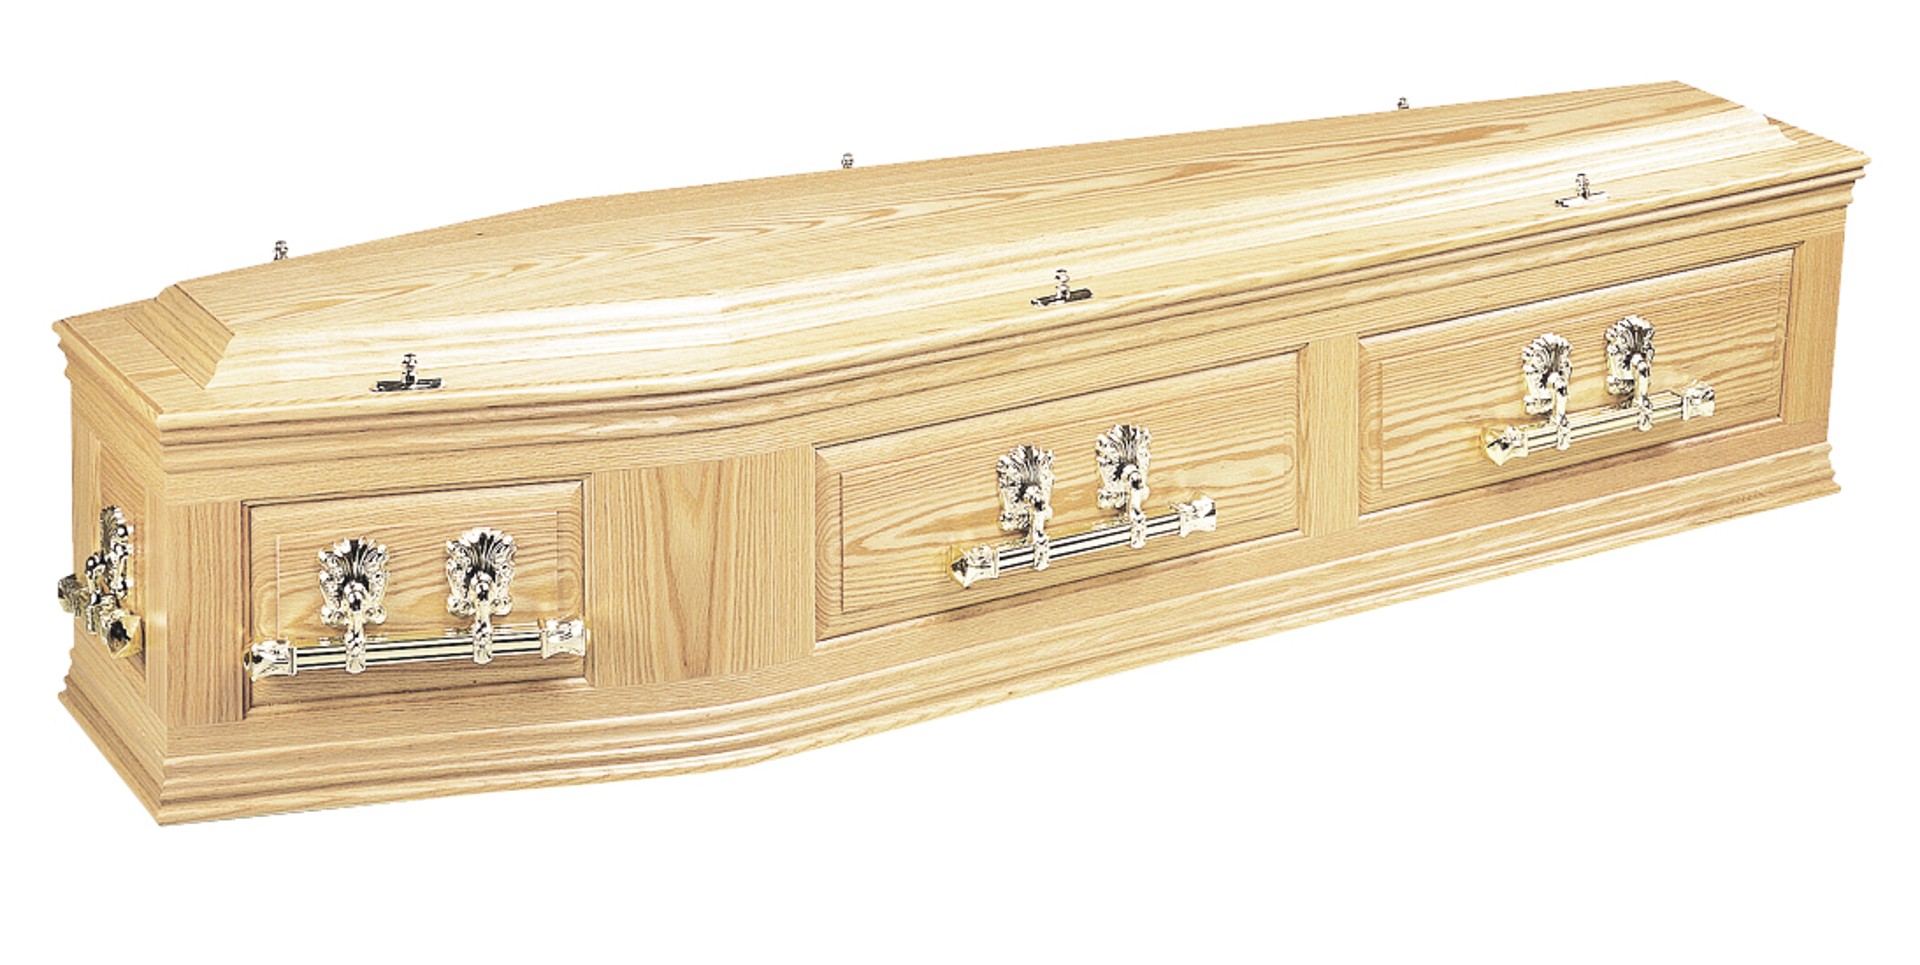 cambridge oak solid wood coffin - north london funeral director